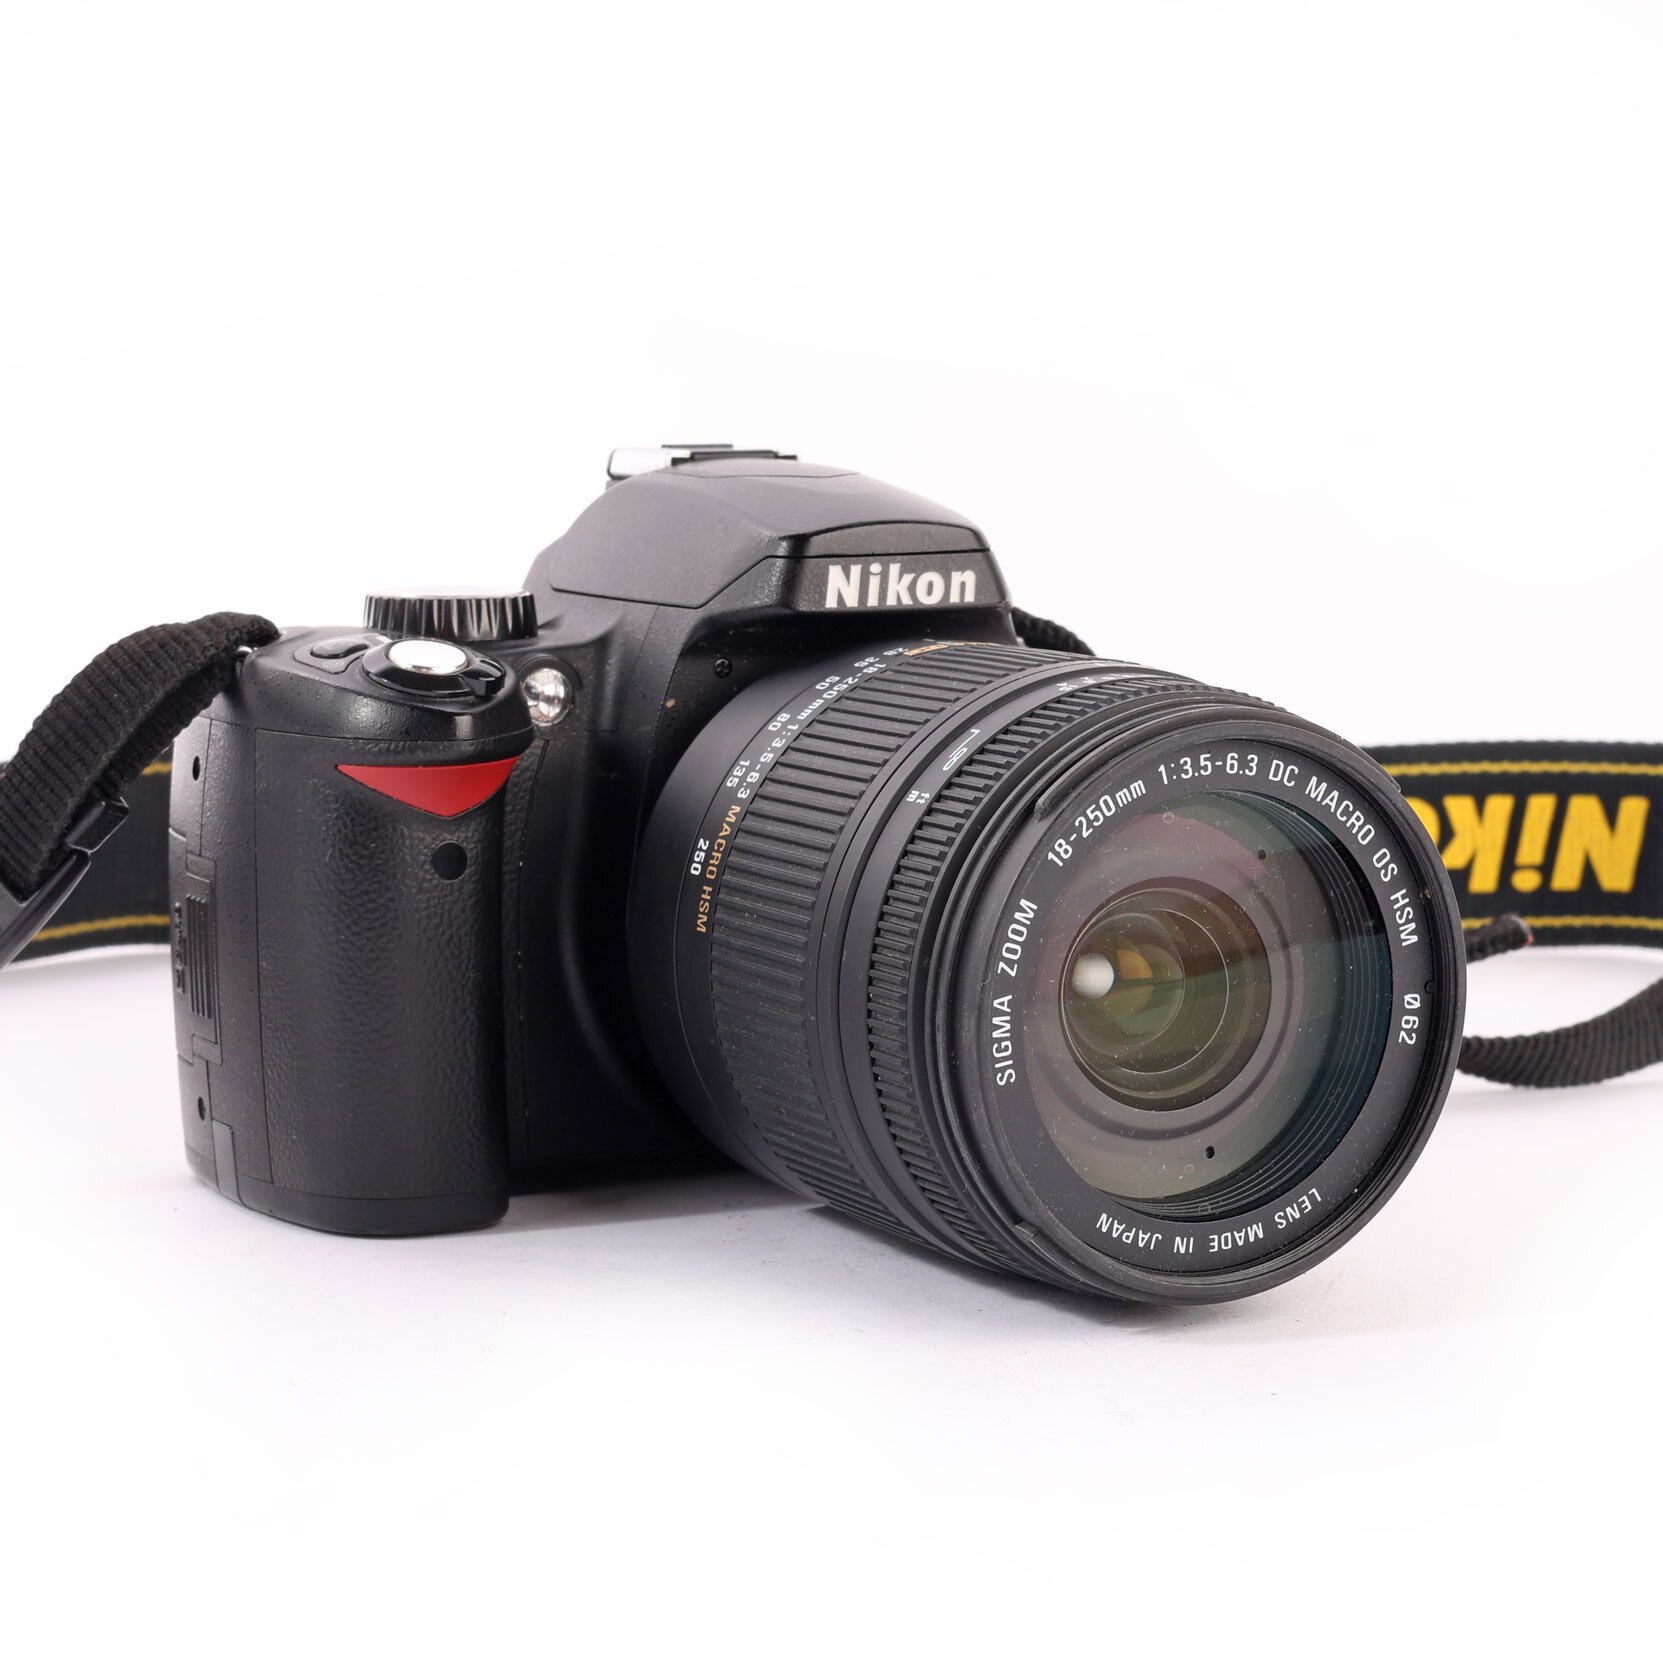 Nikon D60 - Sigma DC 18-250mm 1:3.5-6.3 MACRO HSM